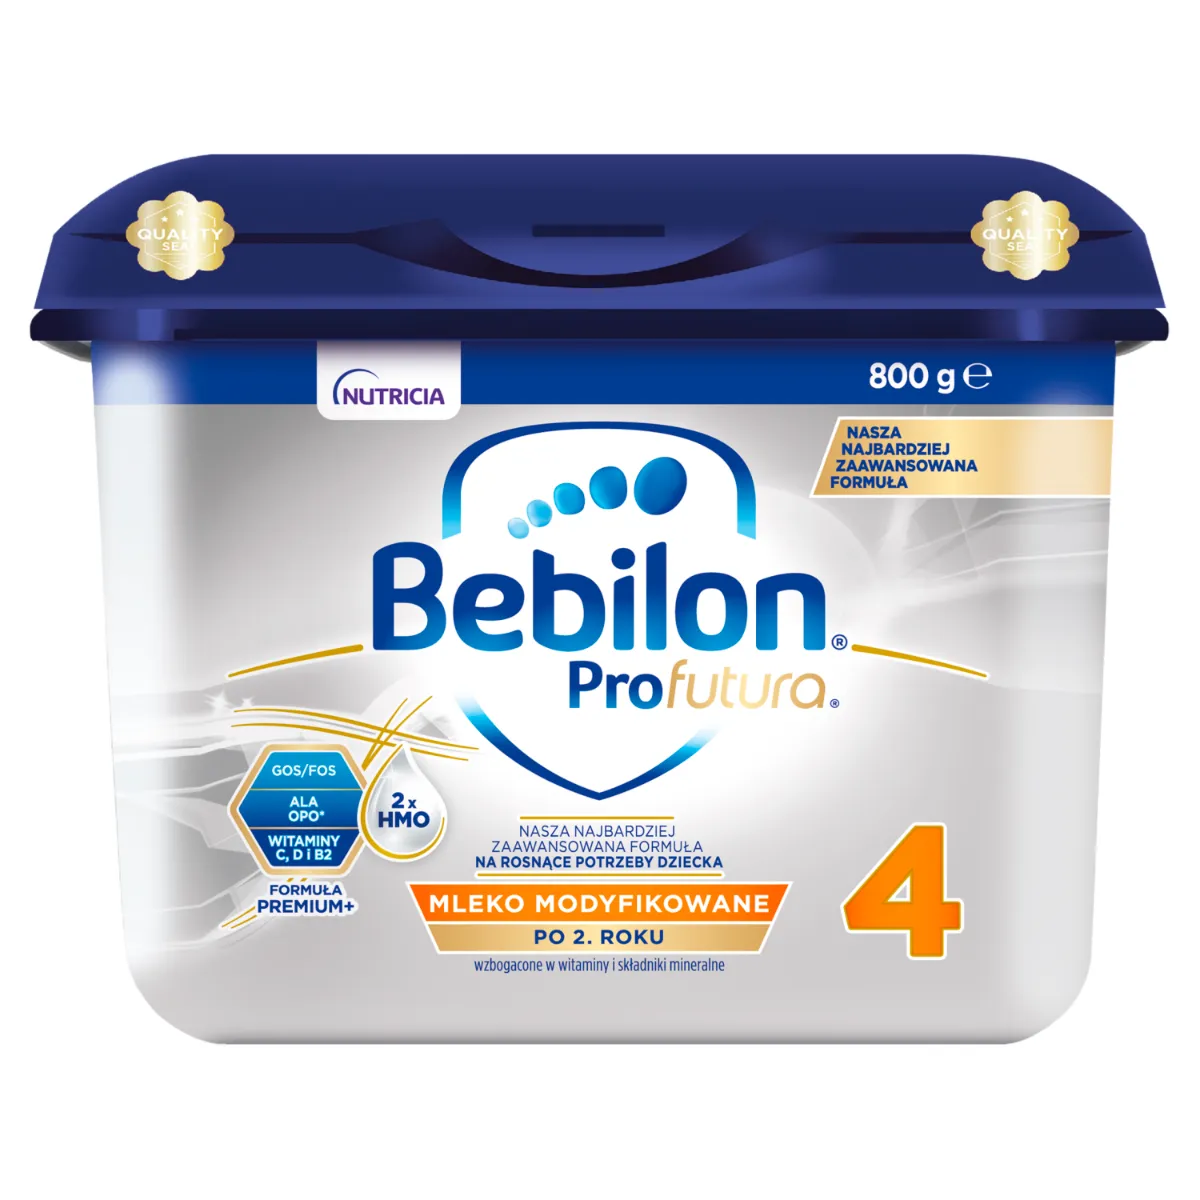 Bebilon Profutura 4. mleko w proszku modyfikowane po 2. roku, 800 g